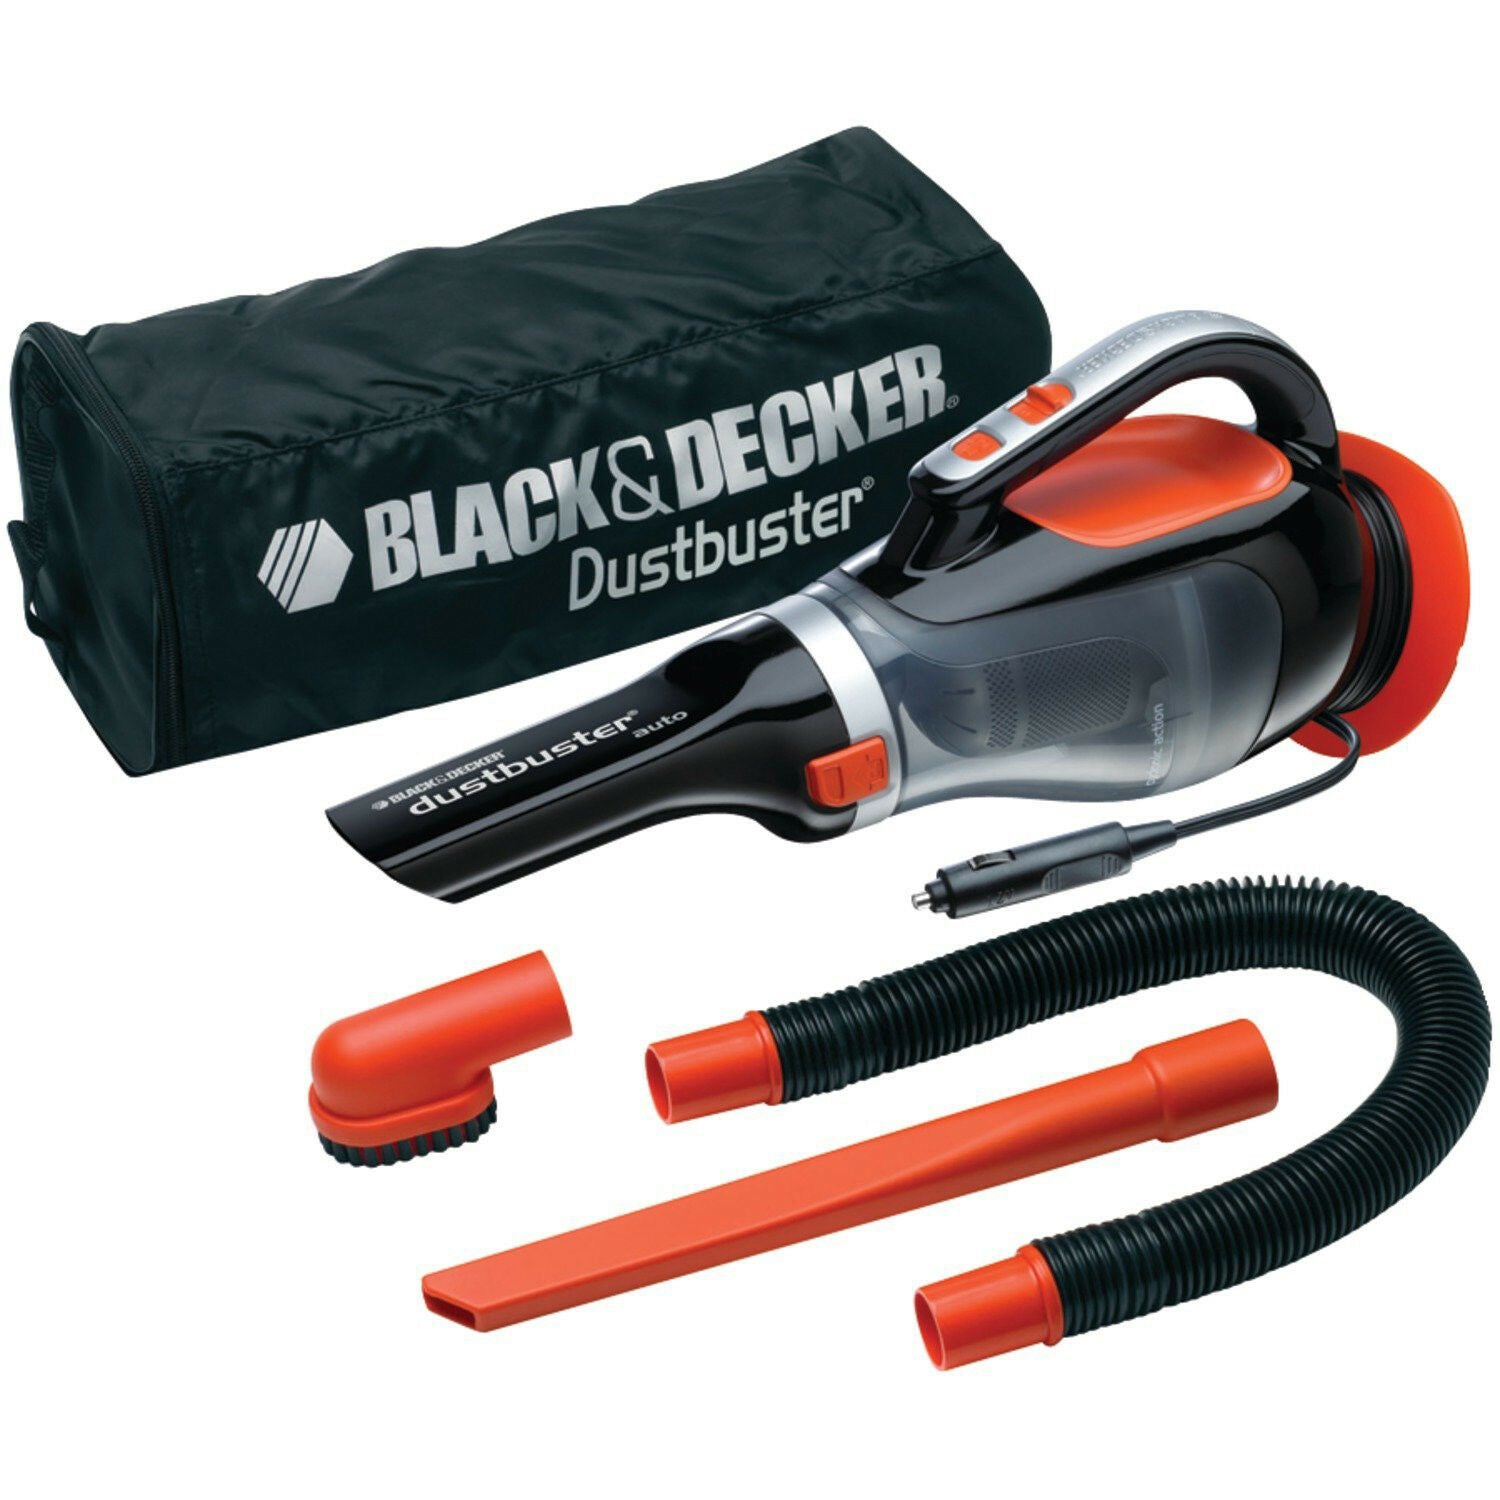 BLACK+DECKER DUSTBUSTER 12-Volt Corded Handheld Vacuum in the